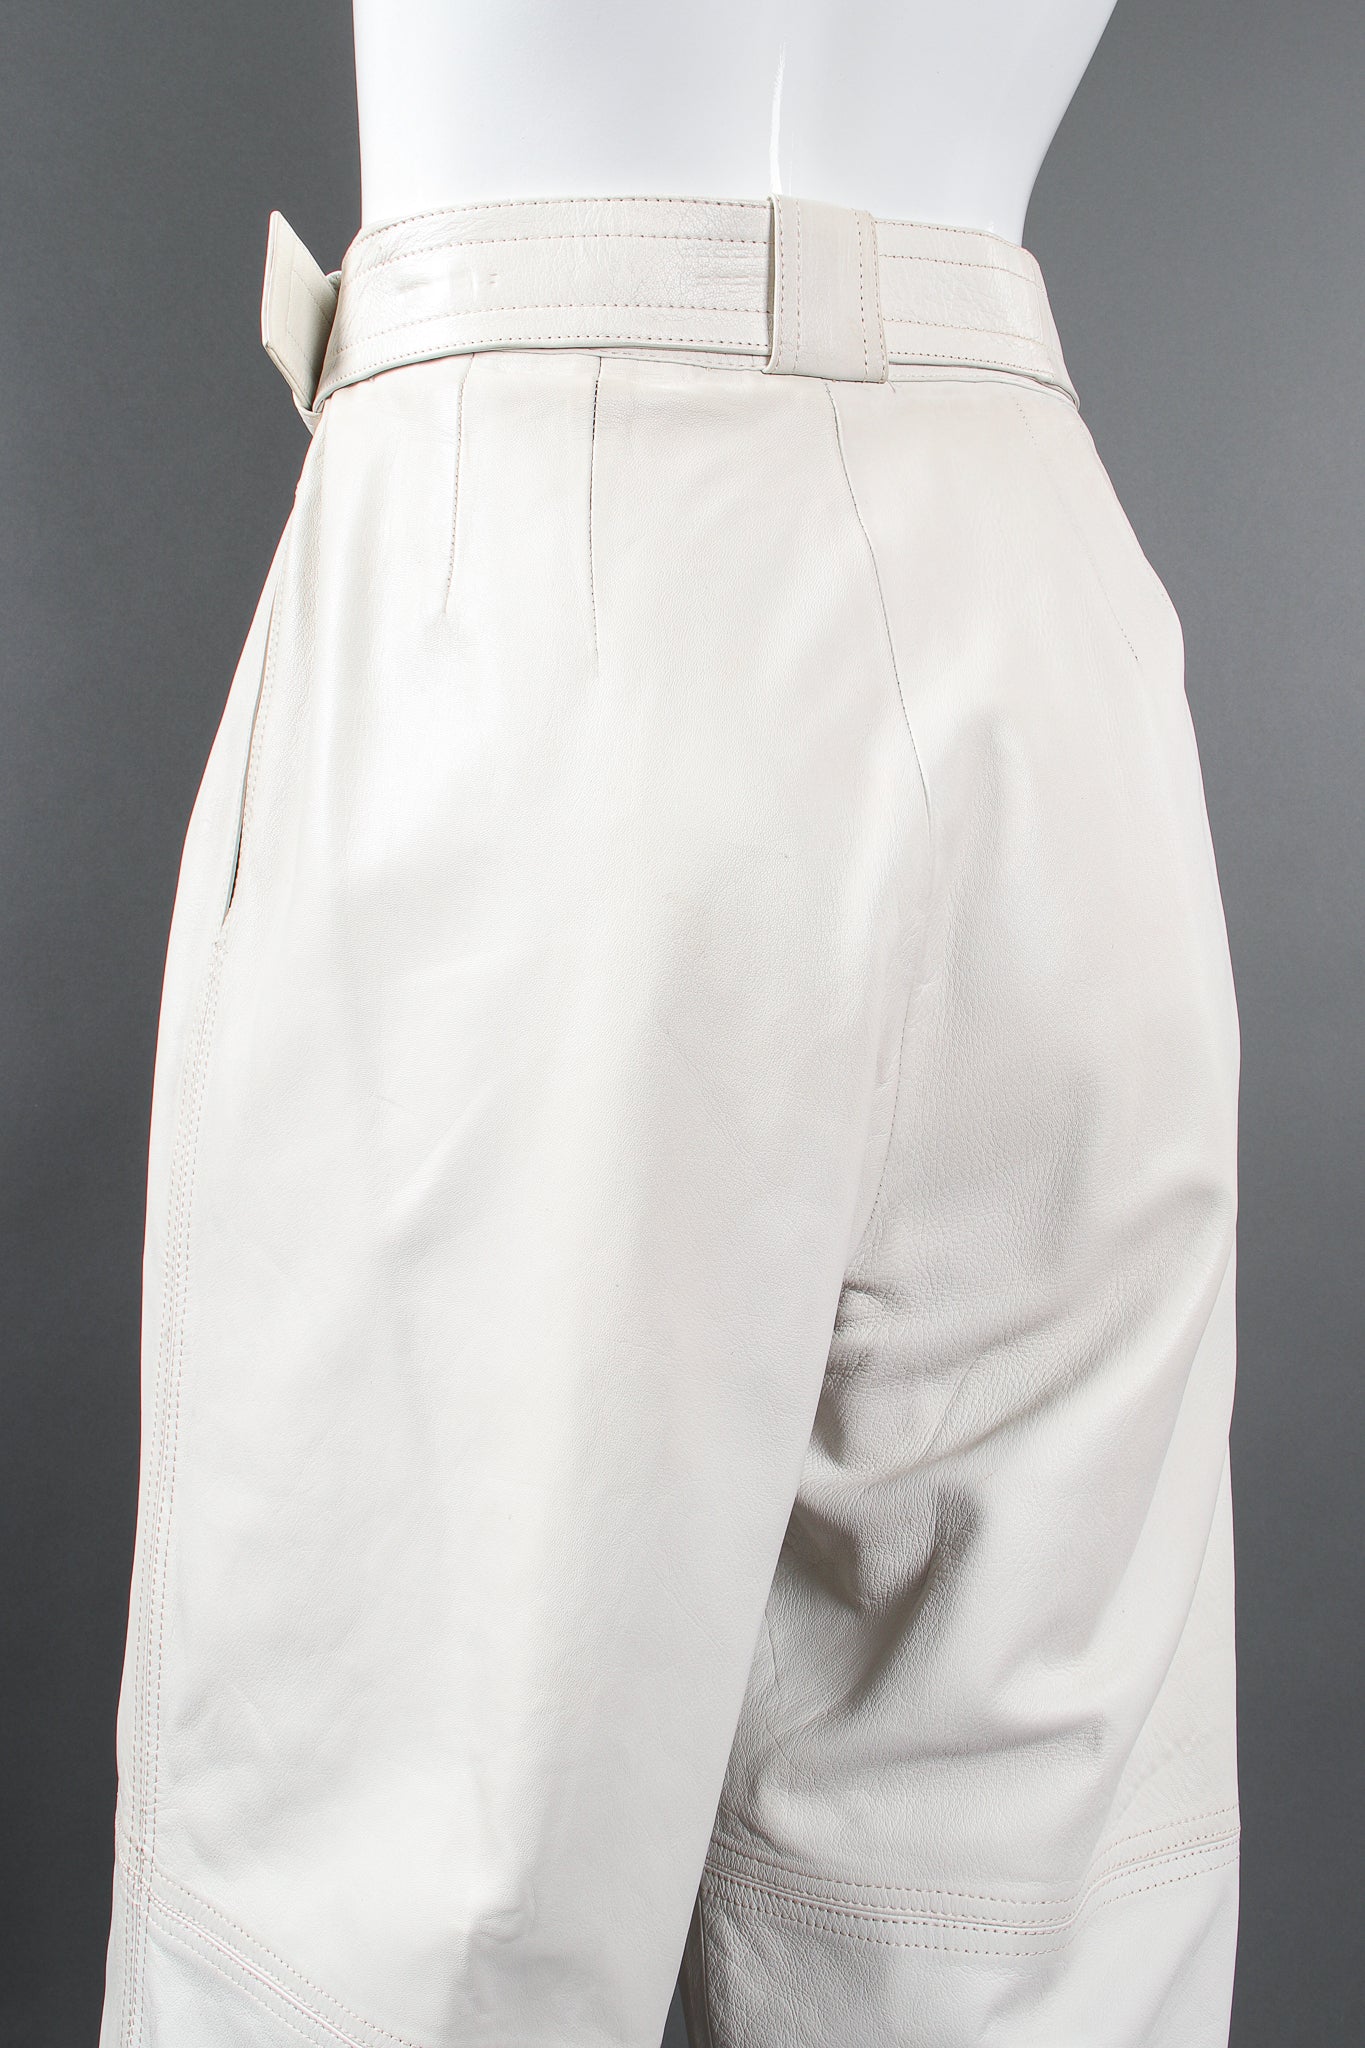 Vintage Loewe Belted Leather Pleat Pant on Mannequin back crop at Recess Los Angeles